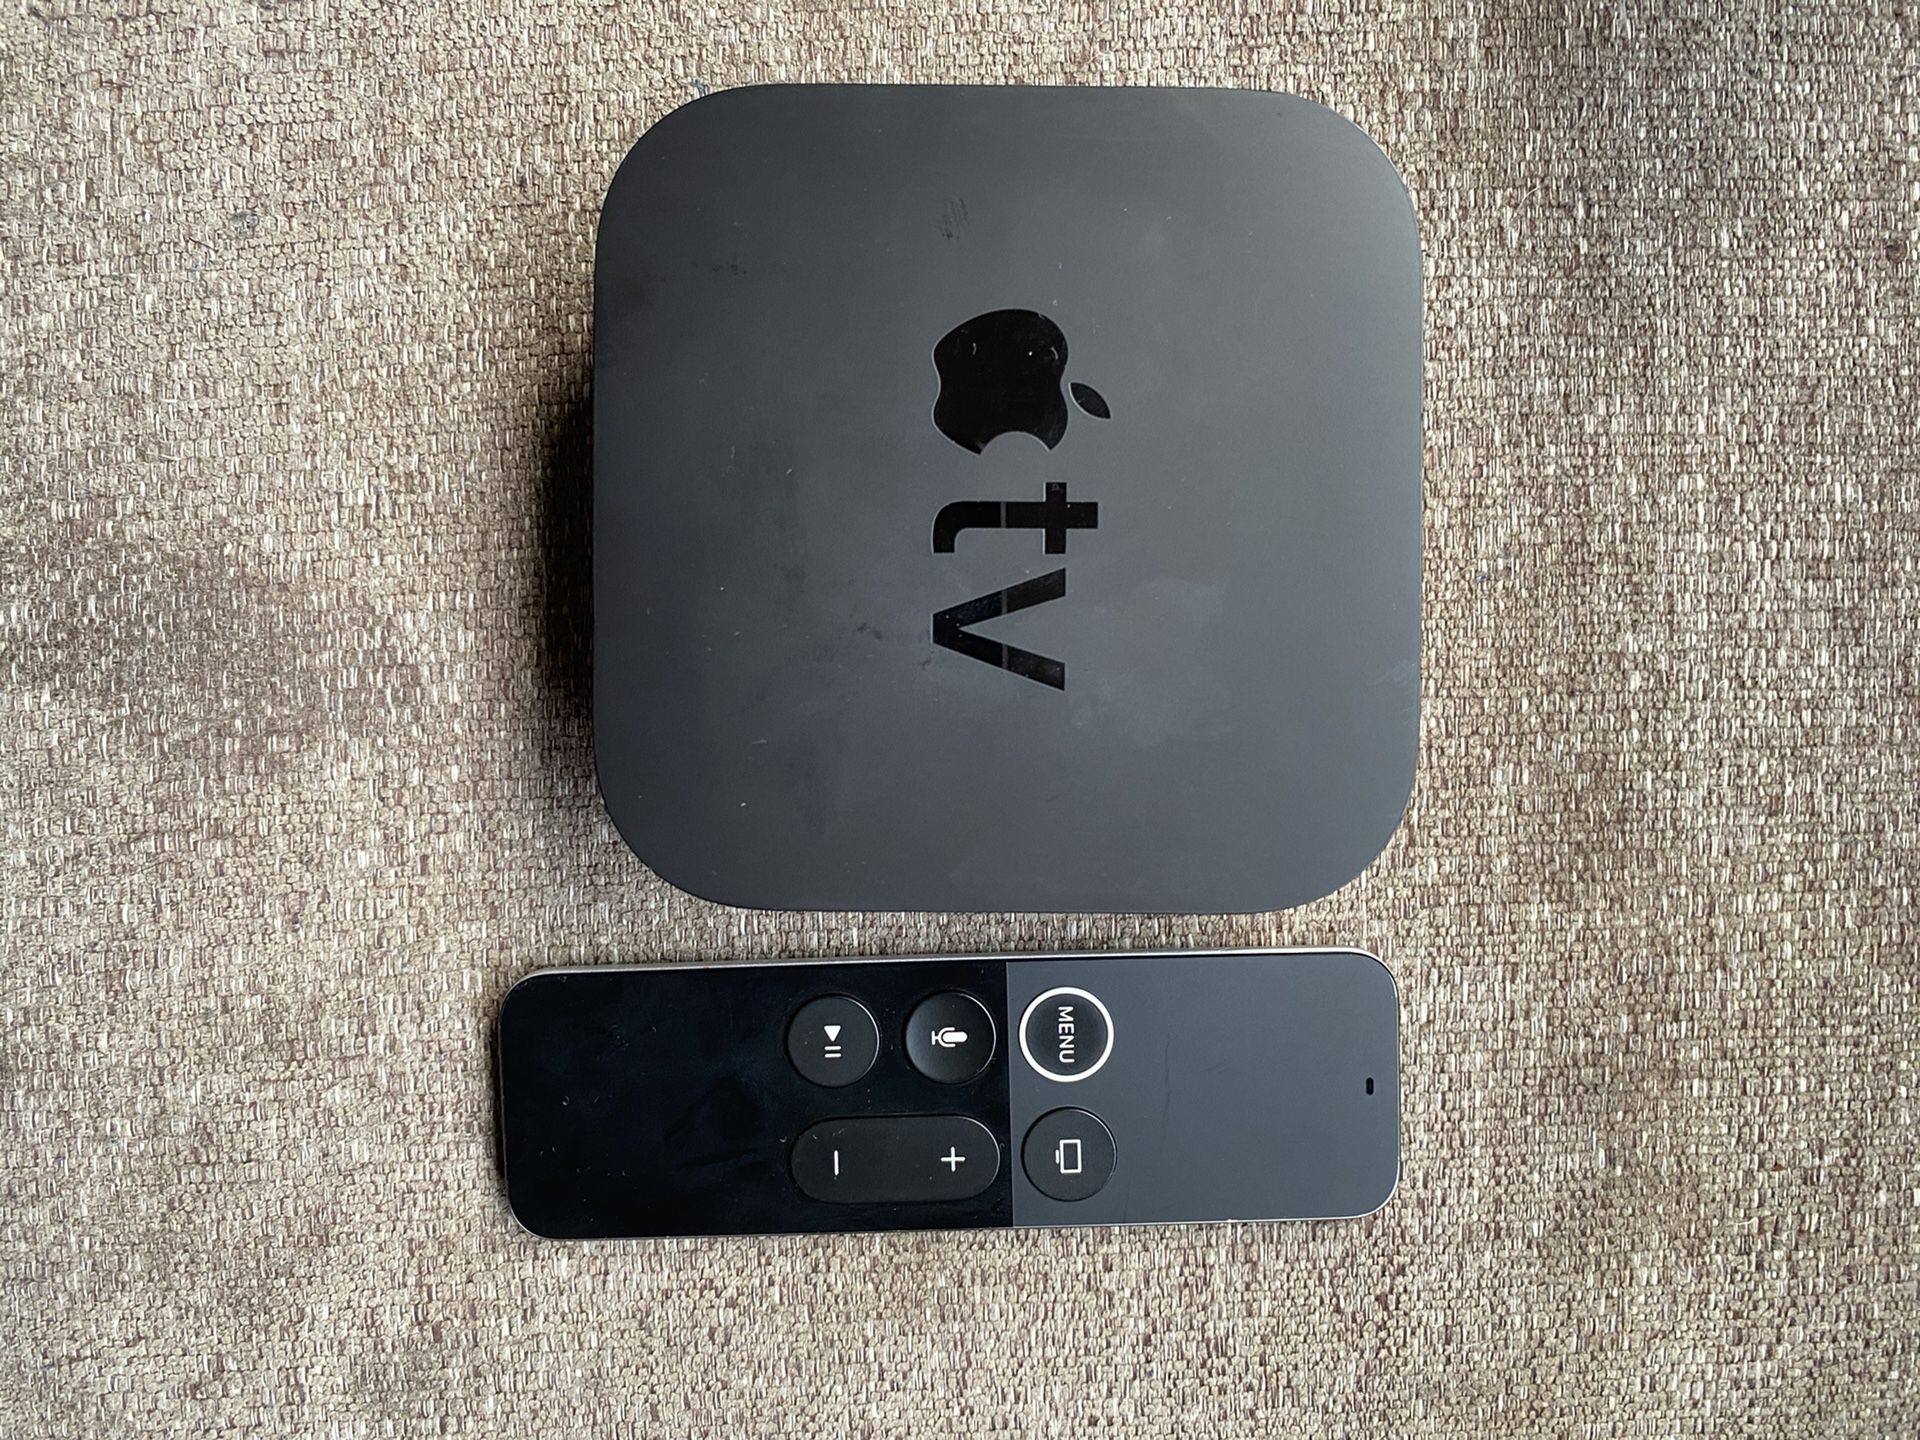 Apple TV 4K (64 GB)